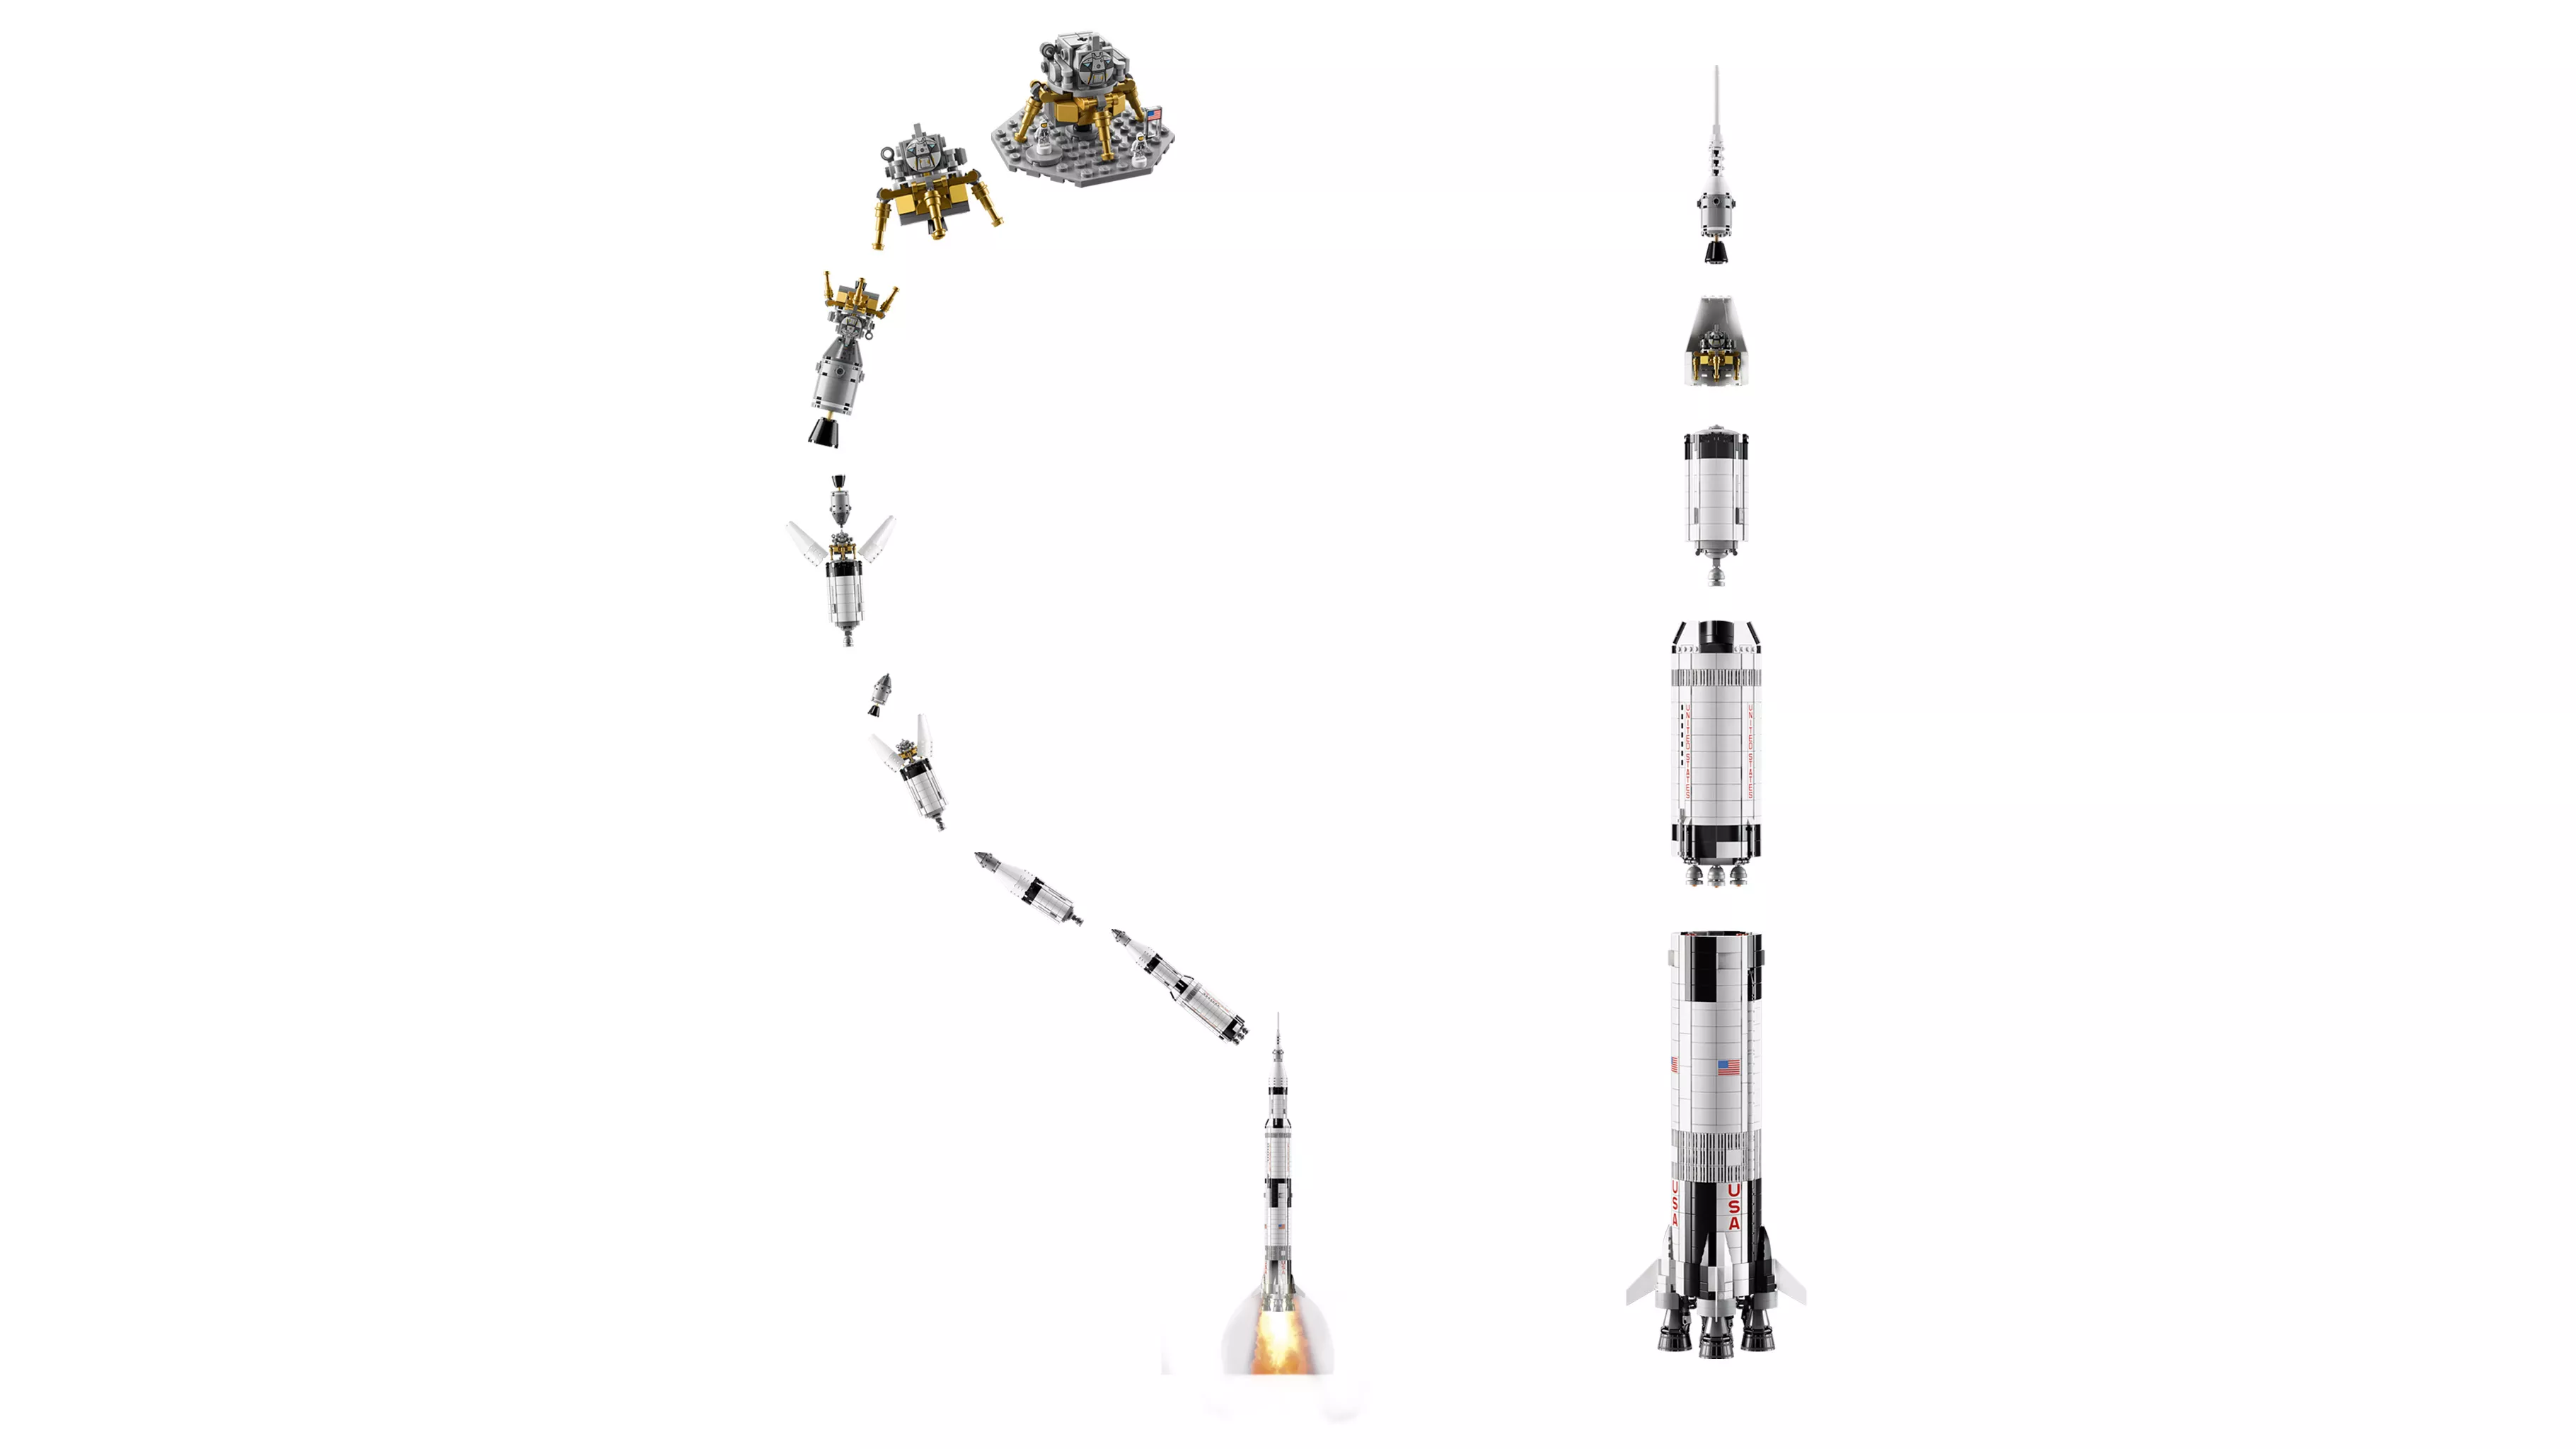 LEGO Ideas NASA Apollo Saturn V - 21309